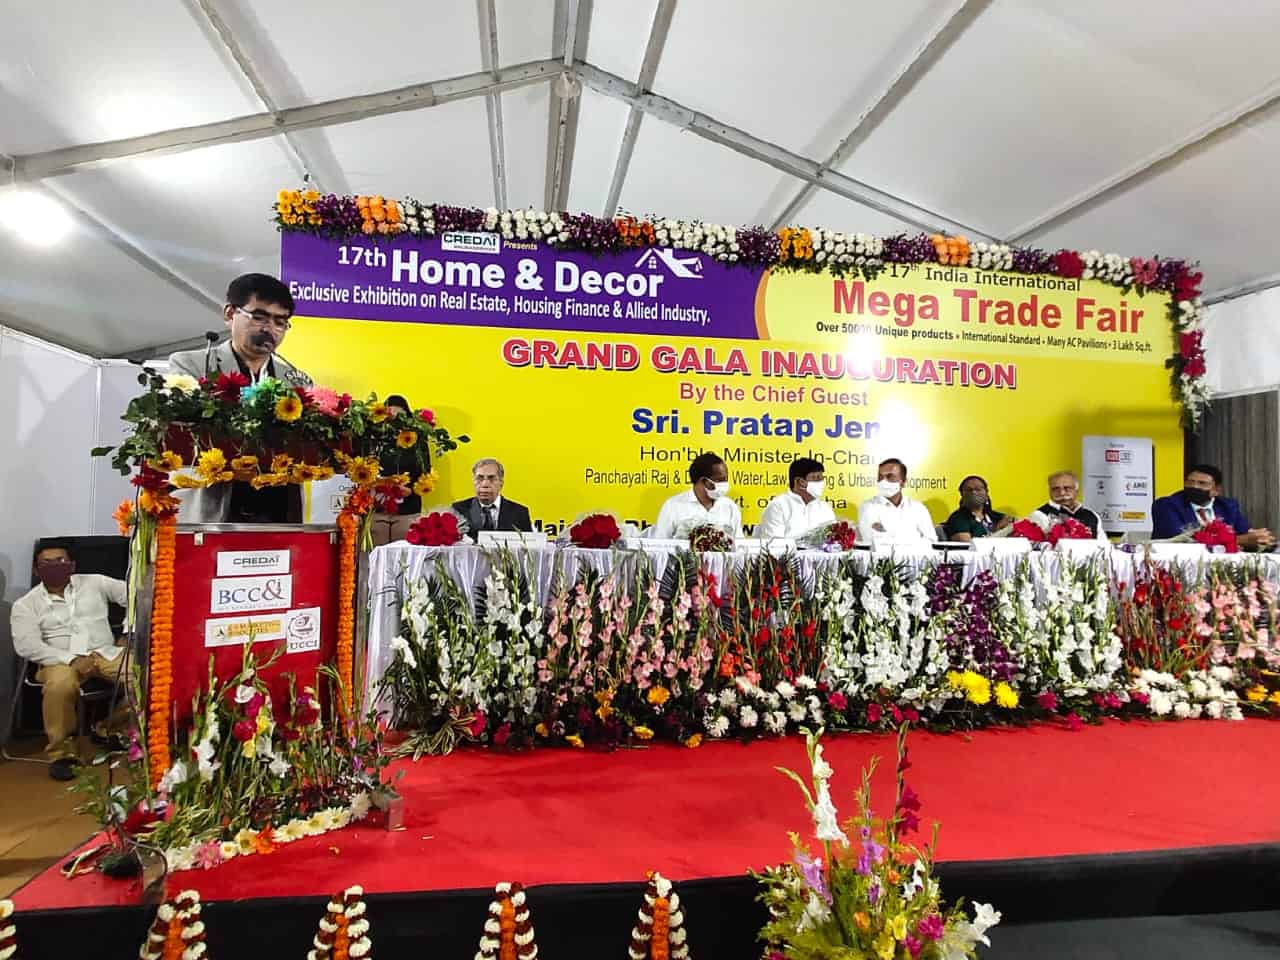 India International Mega Trade Fair and Home & Decor Bhubaneswar 2021